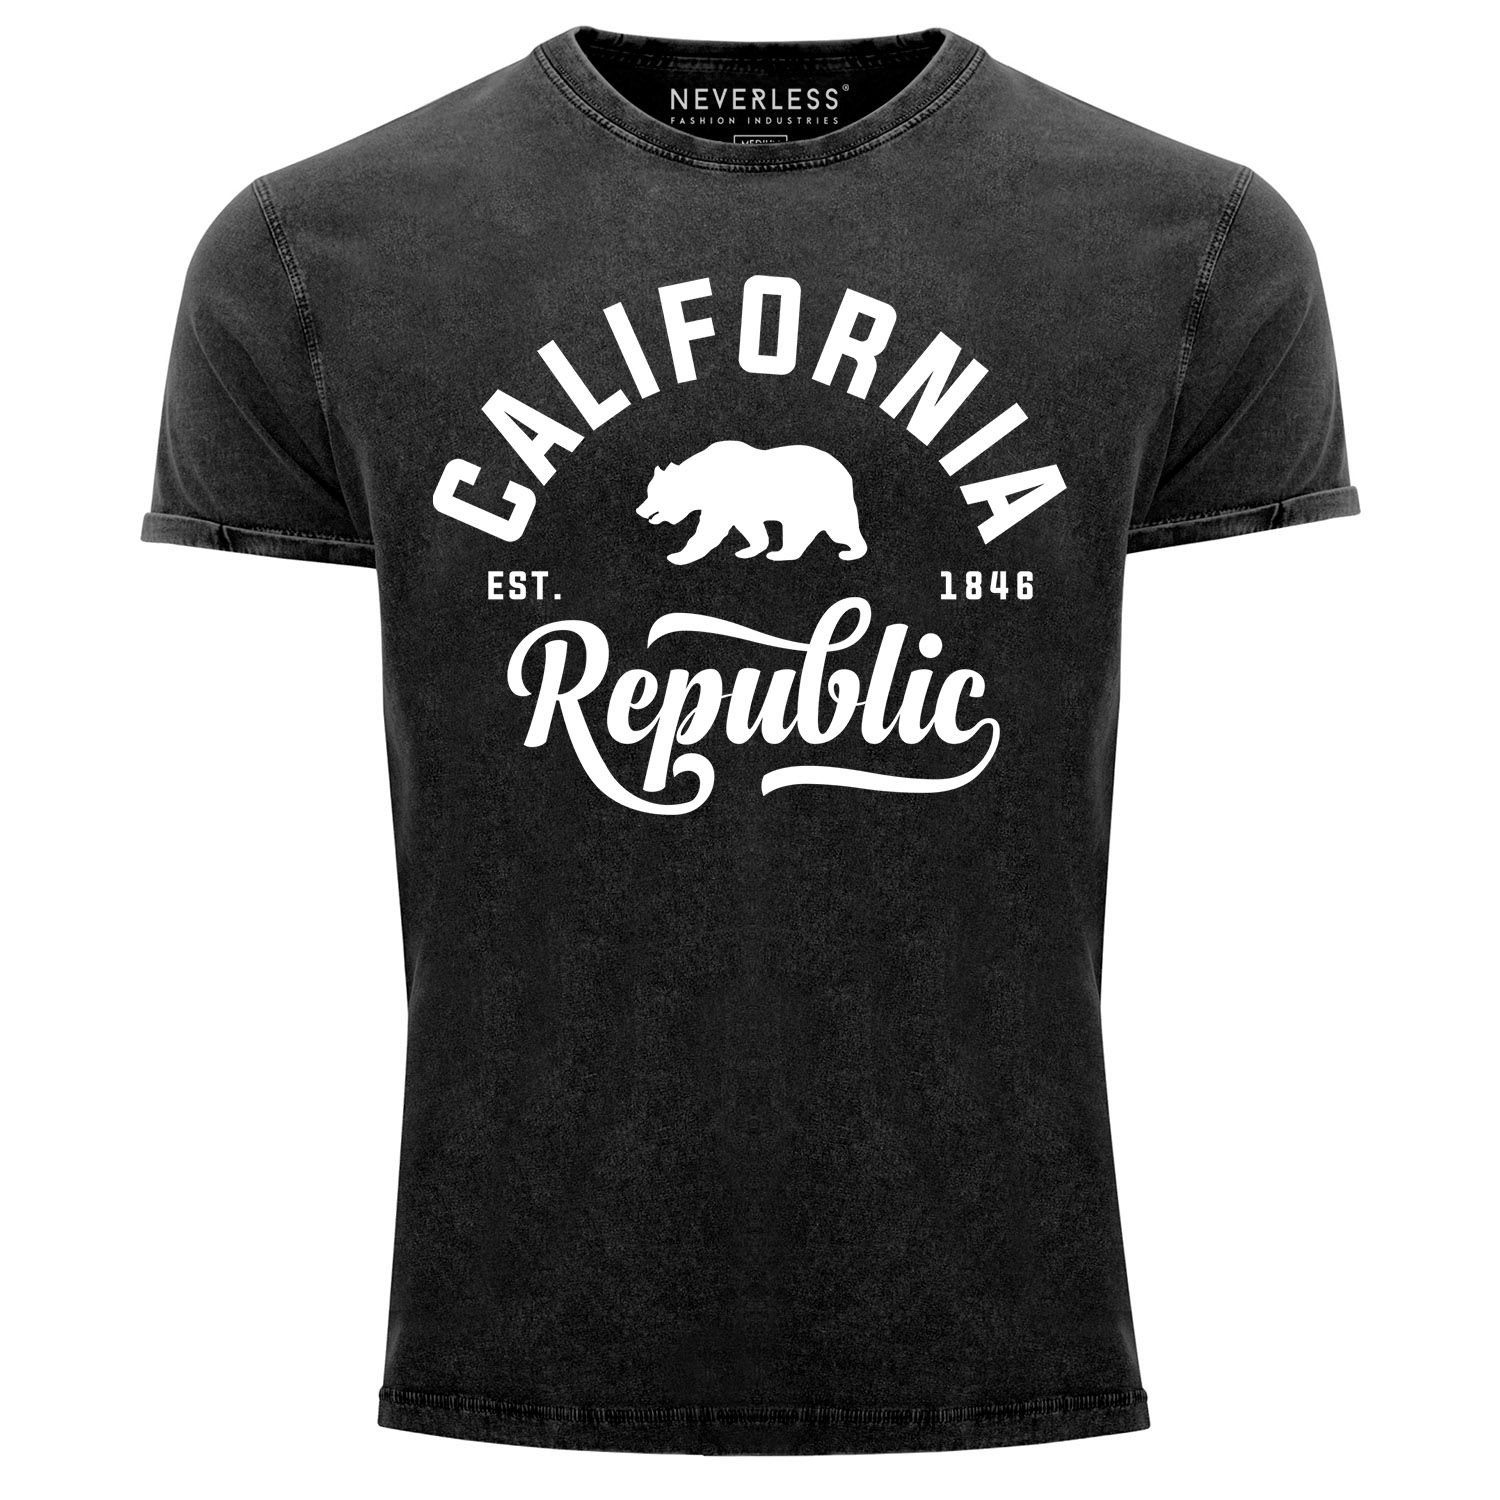 Neverless Print-Shirt Cooles Angesagtes Herren T-Shirt Vintage Shirt California Republic Bär Aufdruck Used Look Slim Fit Neverless® mit Print schwarz